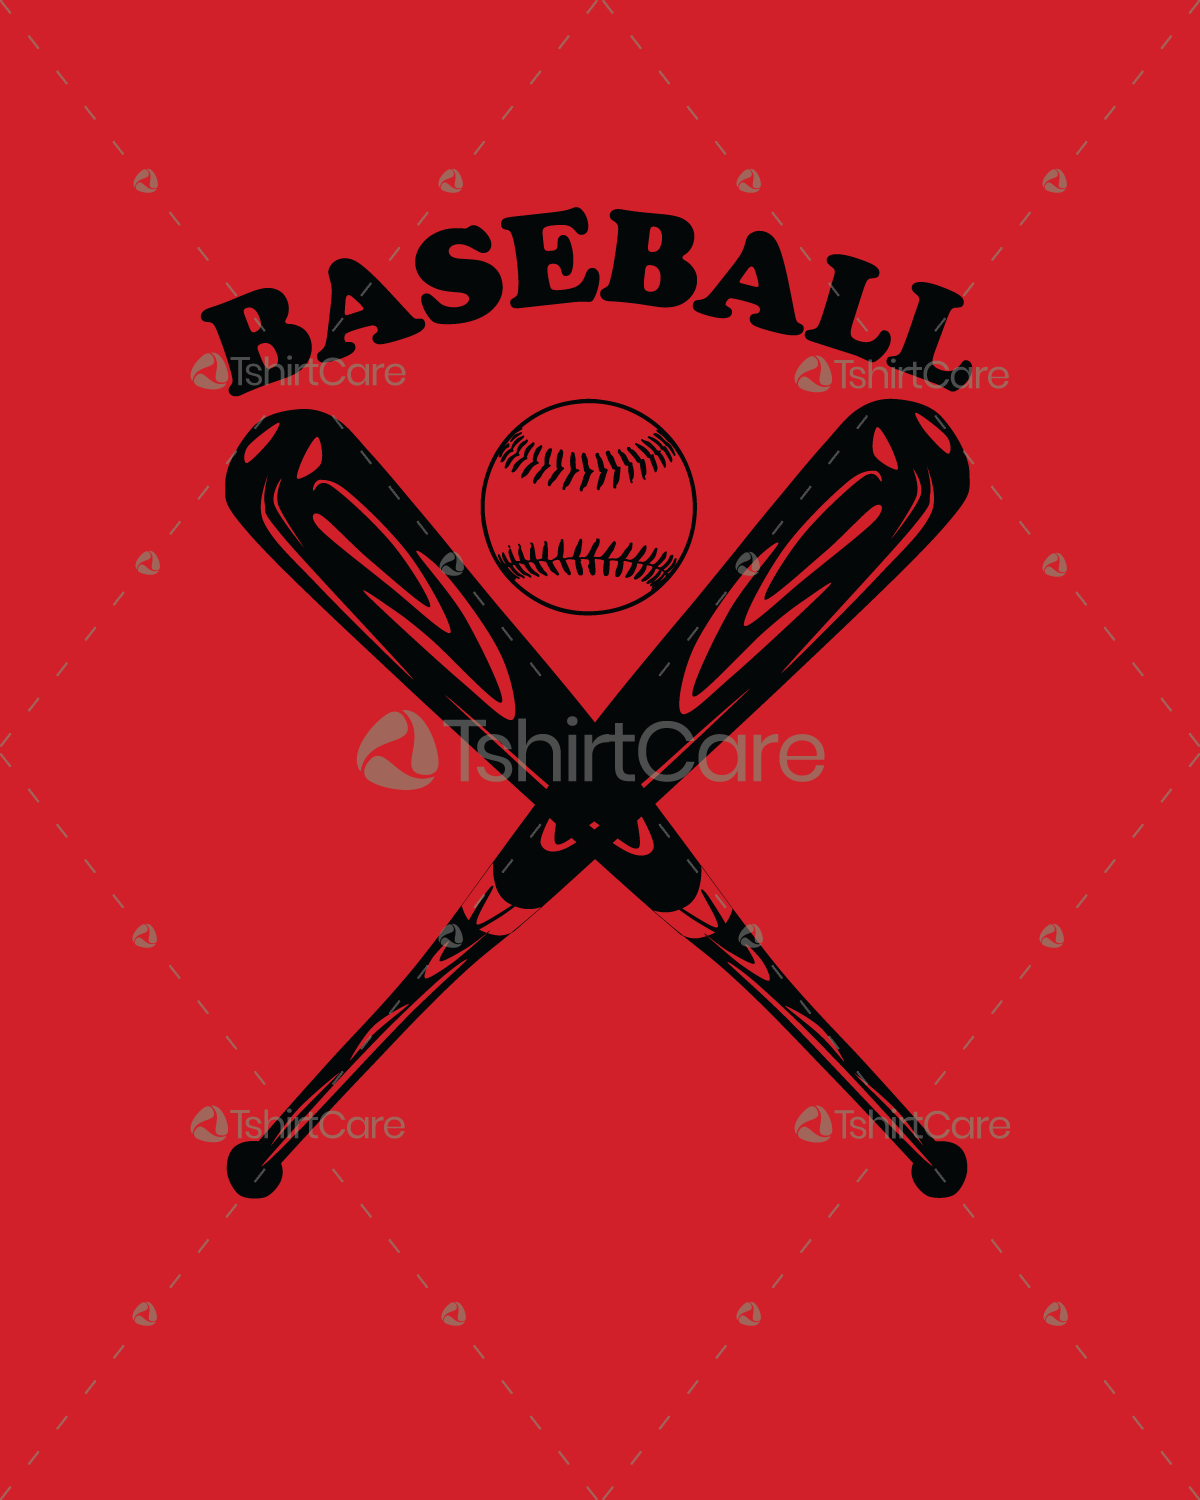 baseball team shirt designs